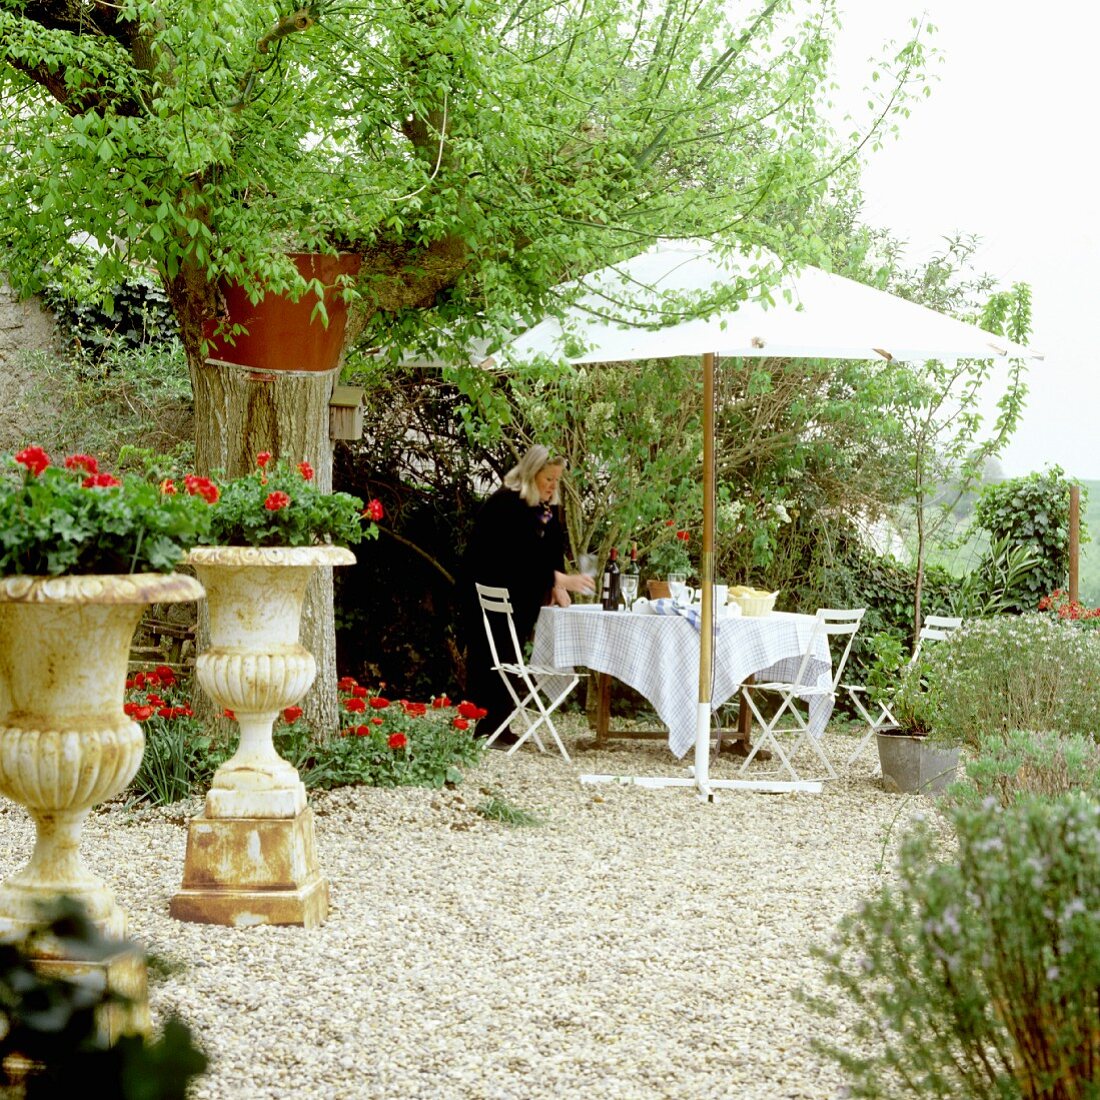 Afternoon tea in garden - set table below parasol